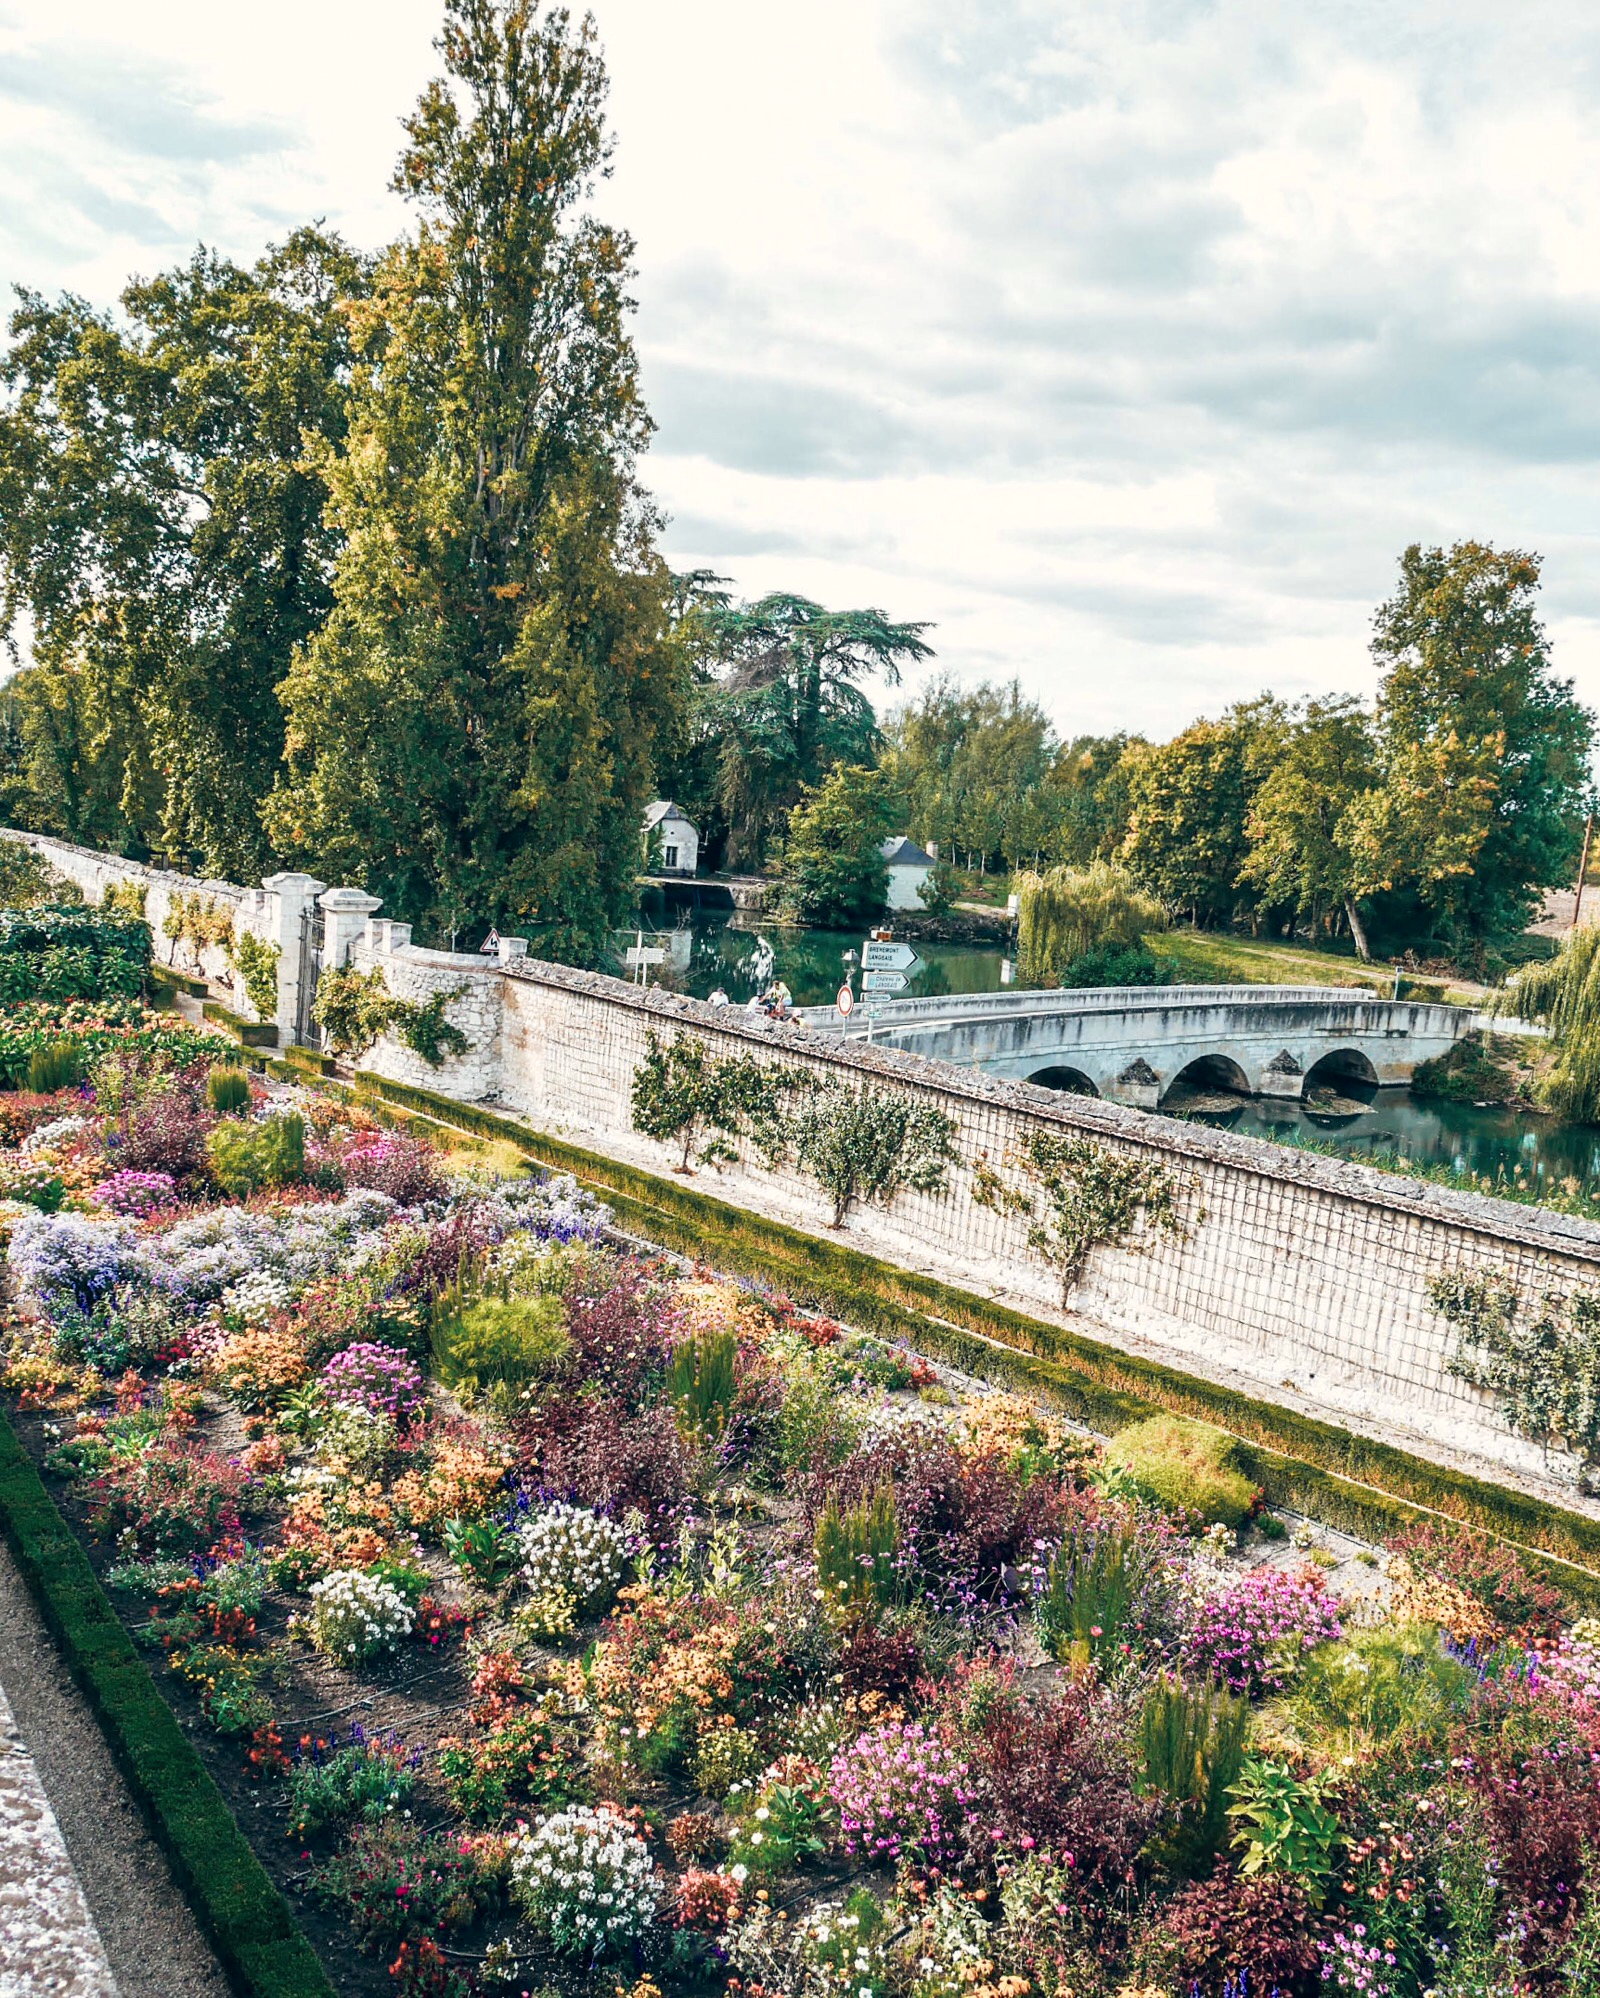 The Flower Garden - Chateau d'Azay-le-Rideau - Loire Valley - France